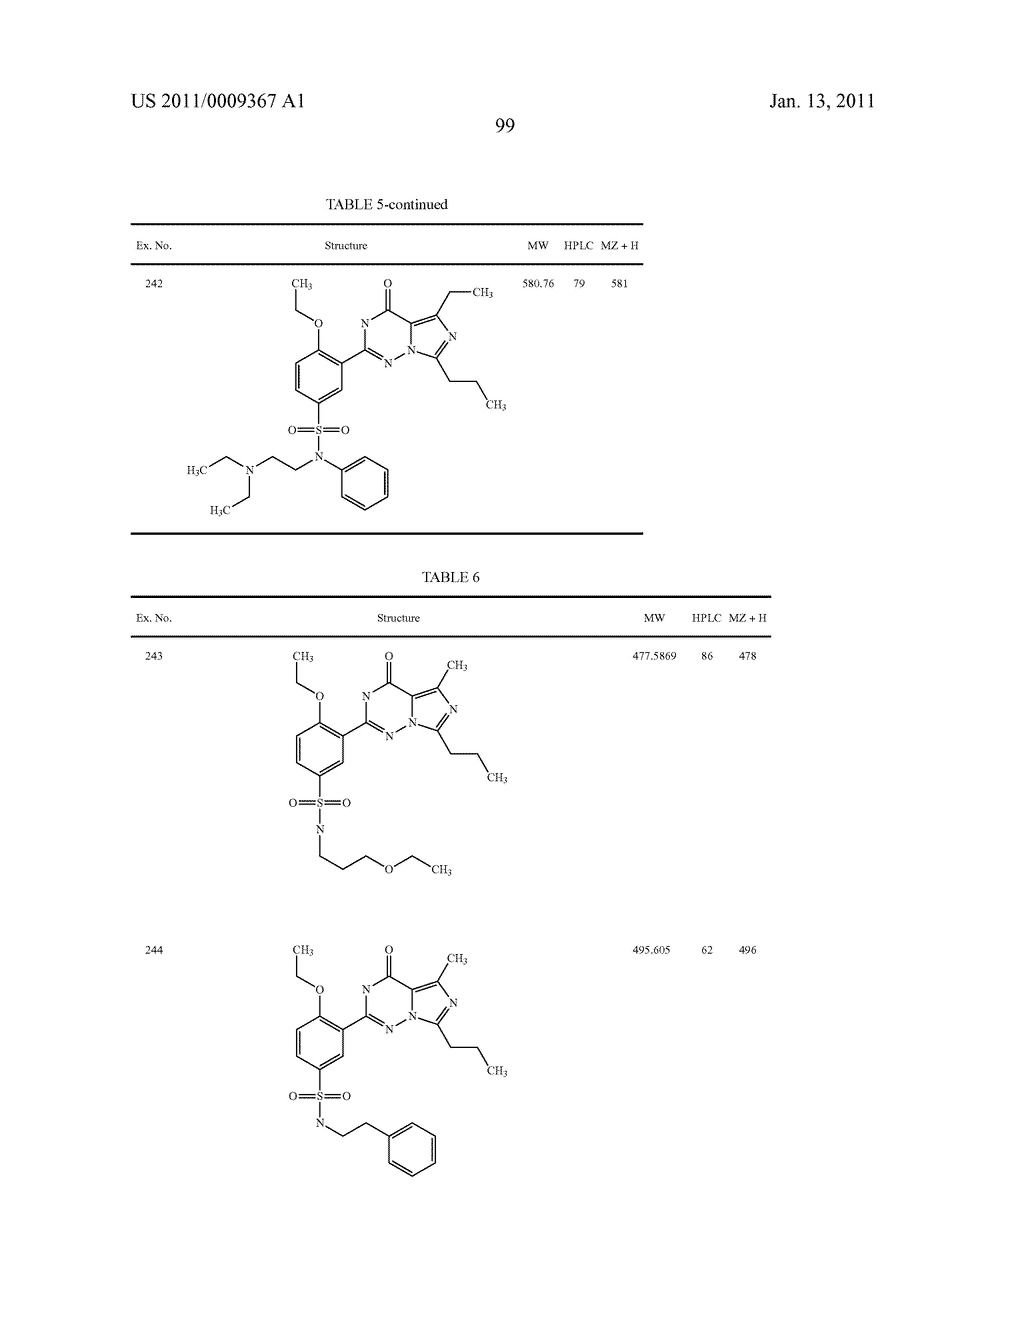 2-PHENYL SUBSTITUTED IMIDAZOTRIAZINONES AS PHOSPHODIESTERASE INHIBITORS - diagram, schematic, and image 100